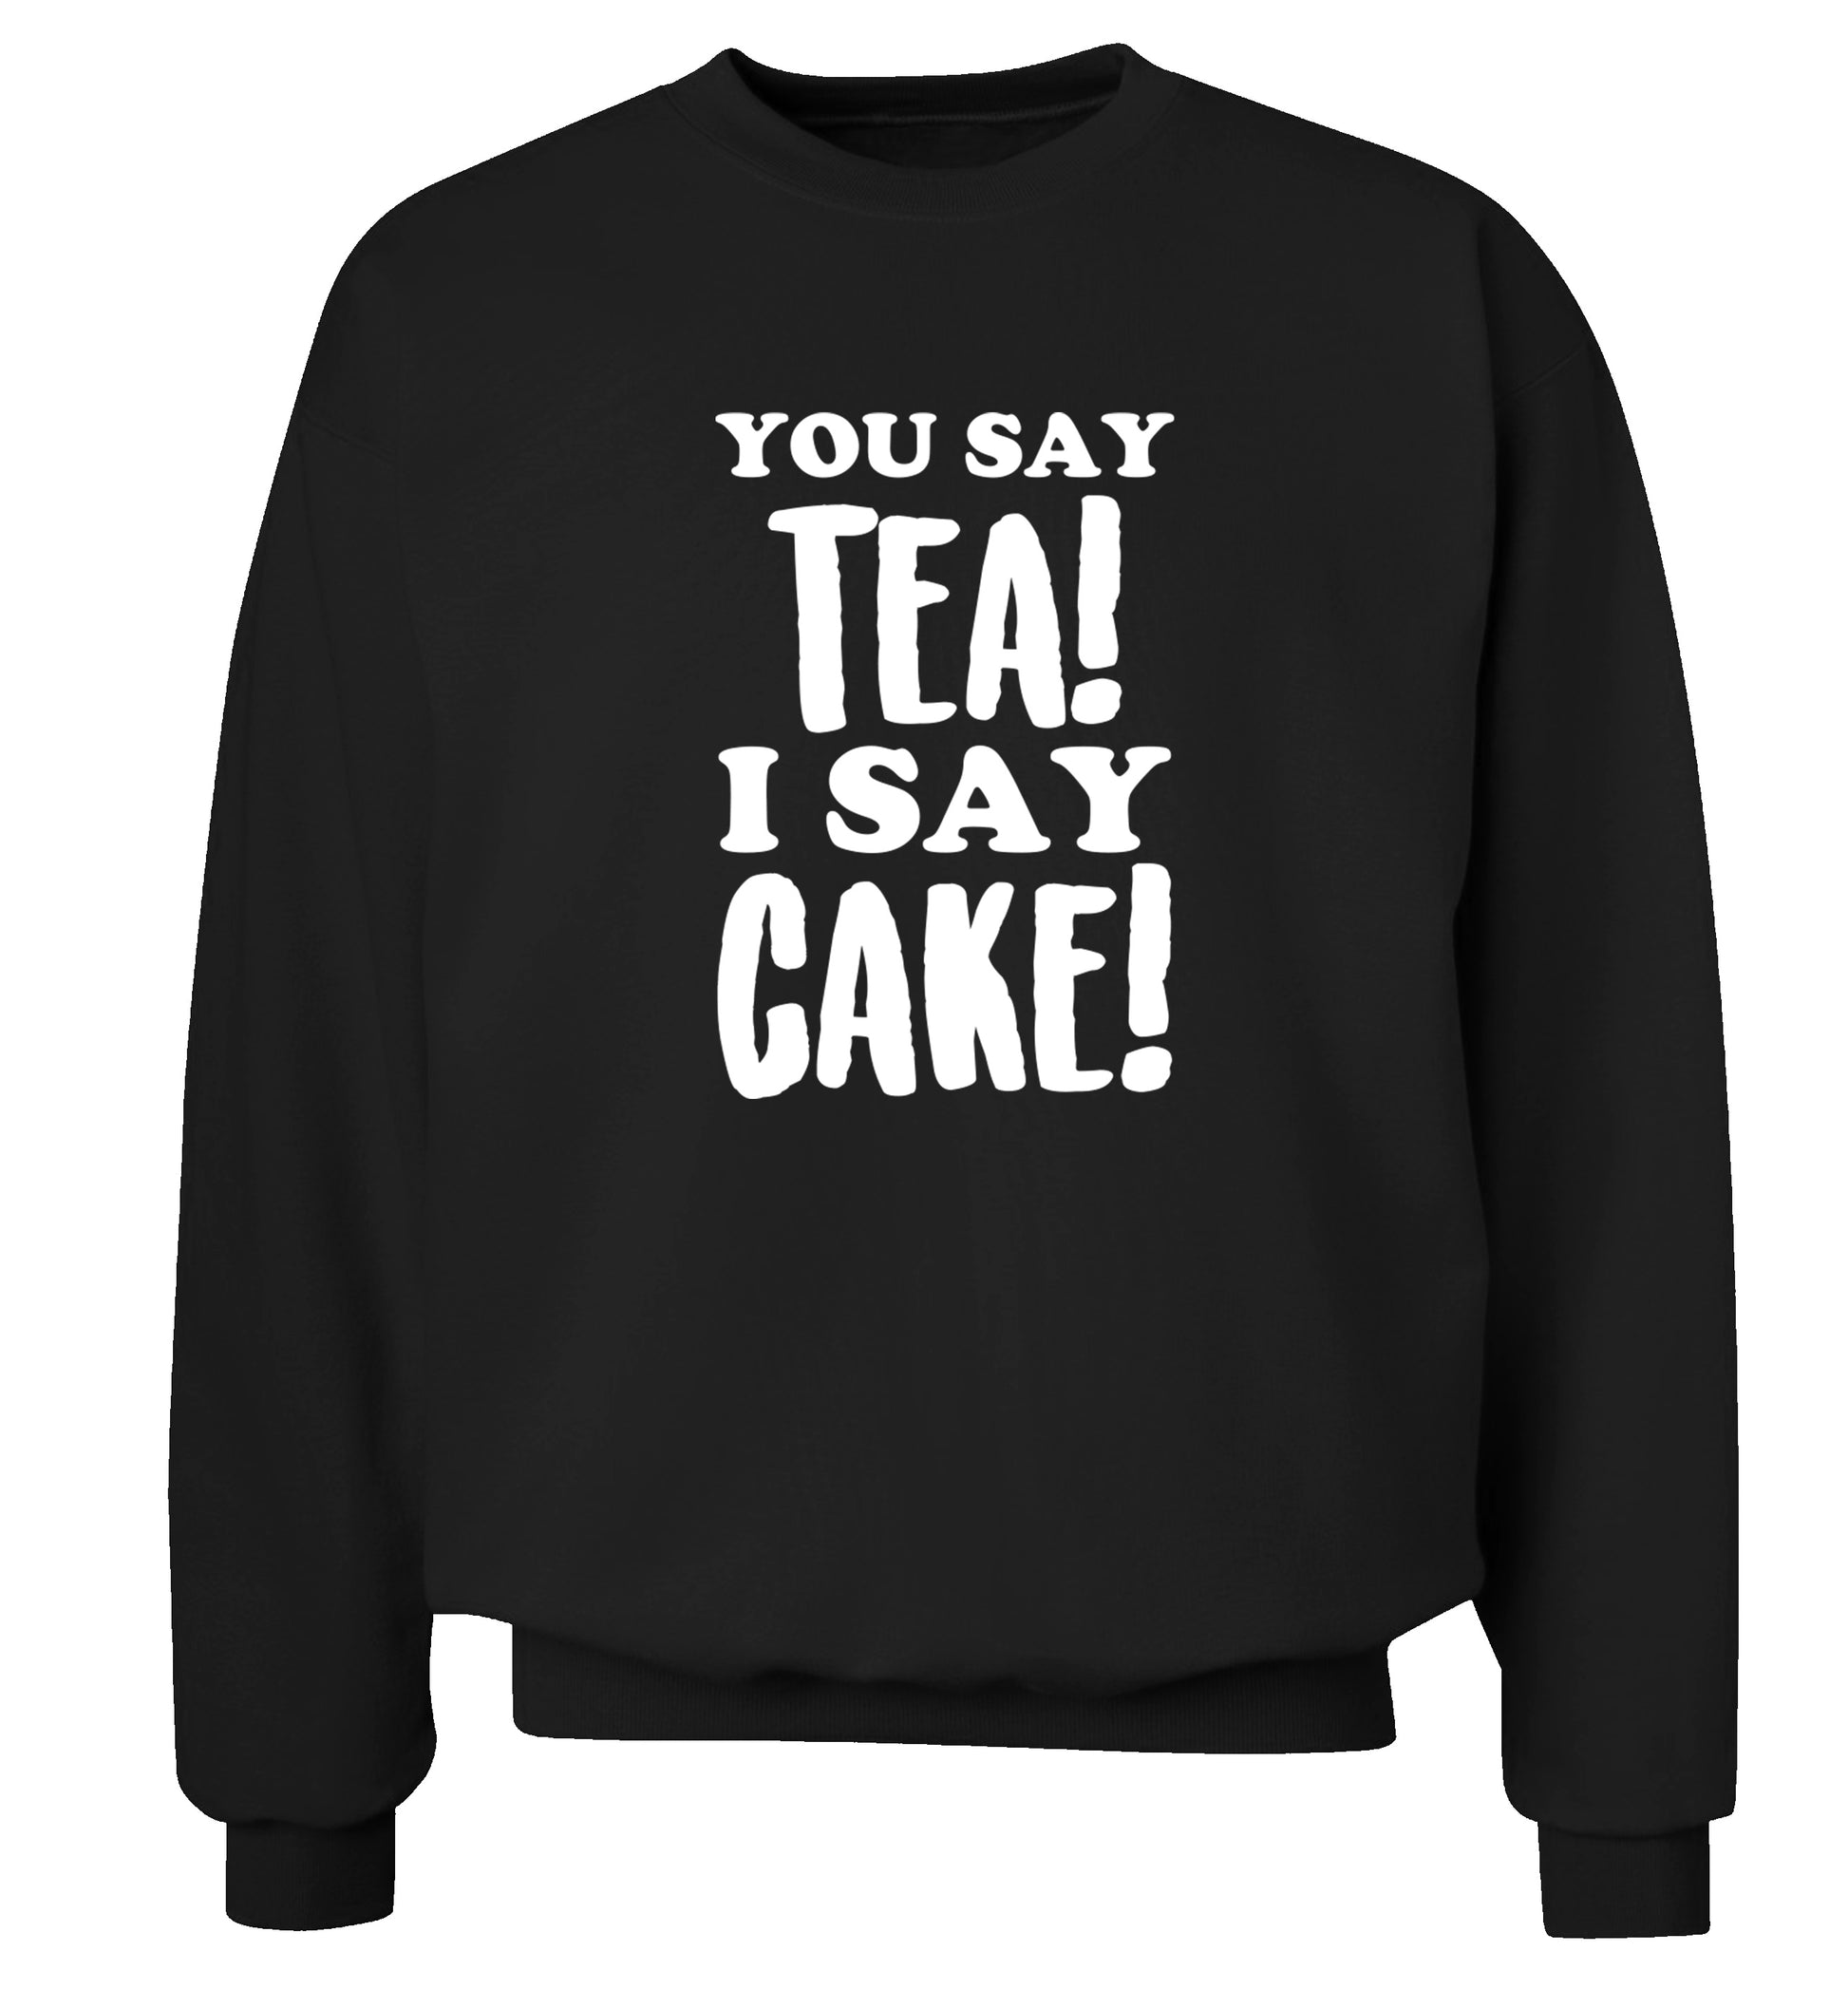 You say tea I say cake! Adult's unisex black Sweater 2XL